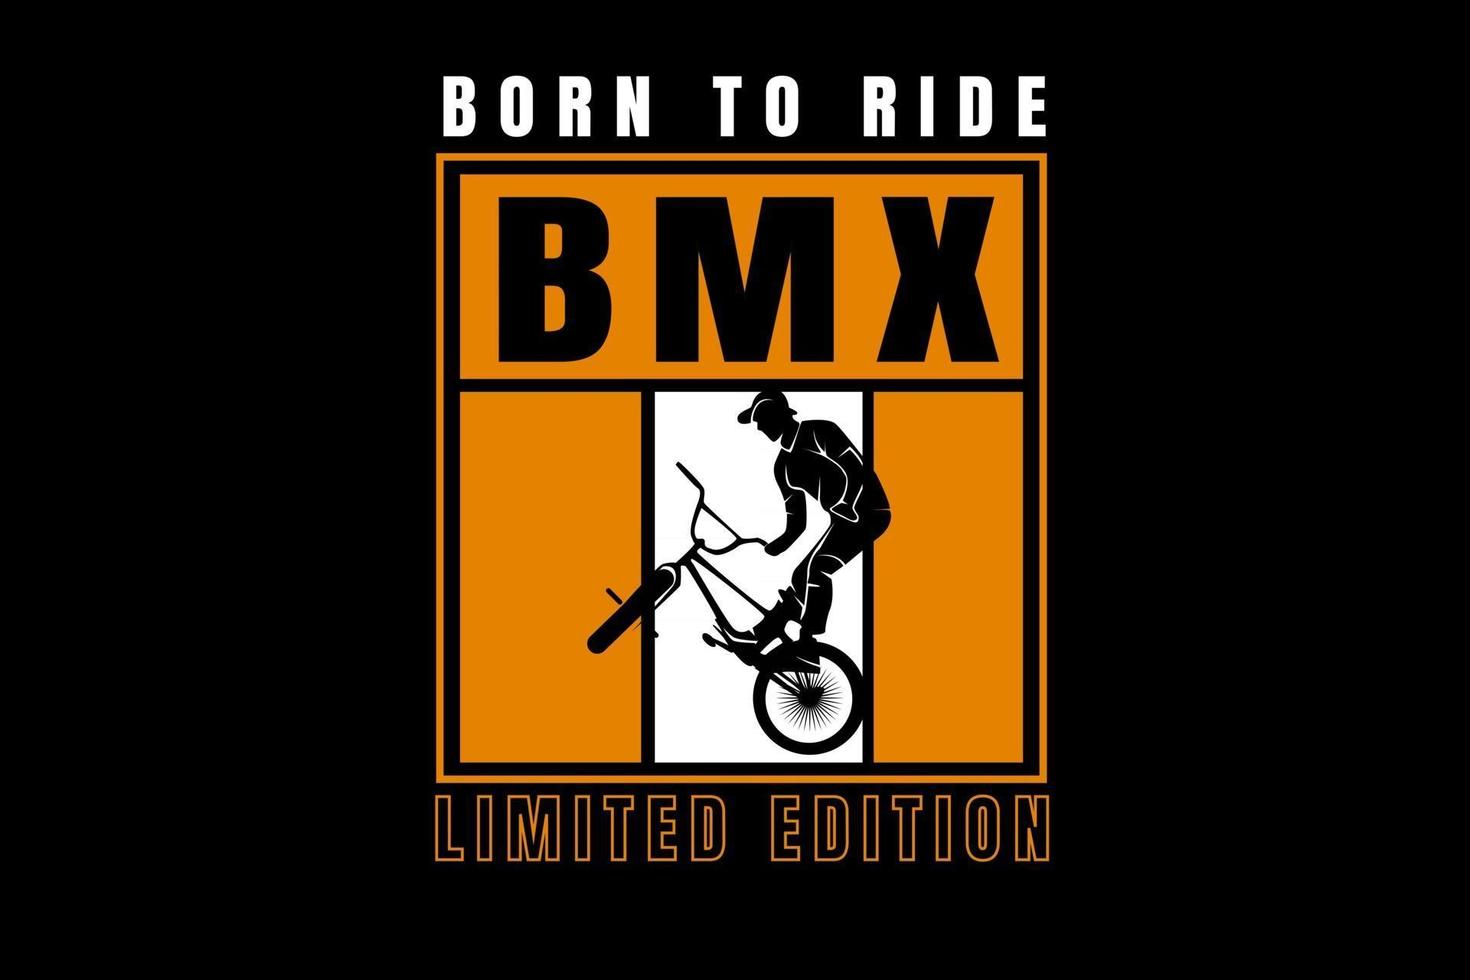 Born to Ride Fahrrad Motocross Limited Edition Farbe Weiß und Gelb vektor